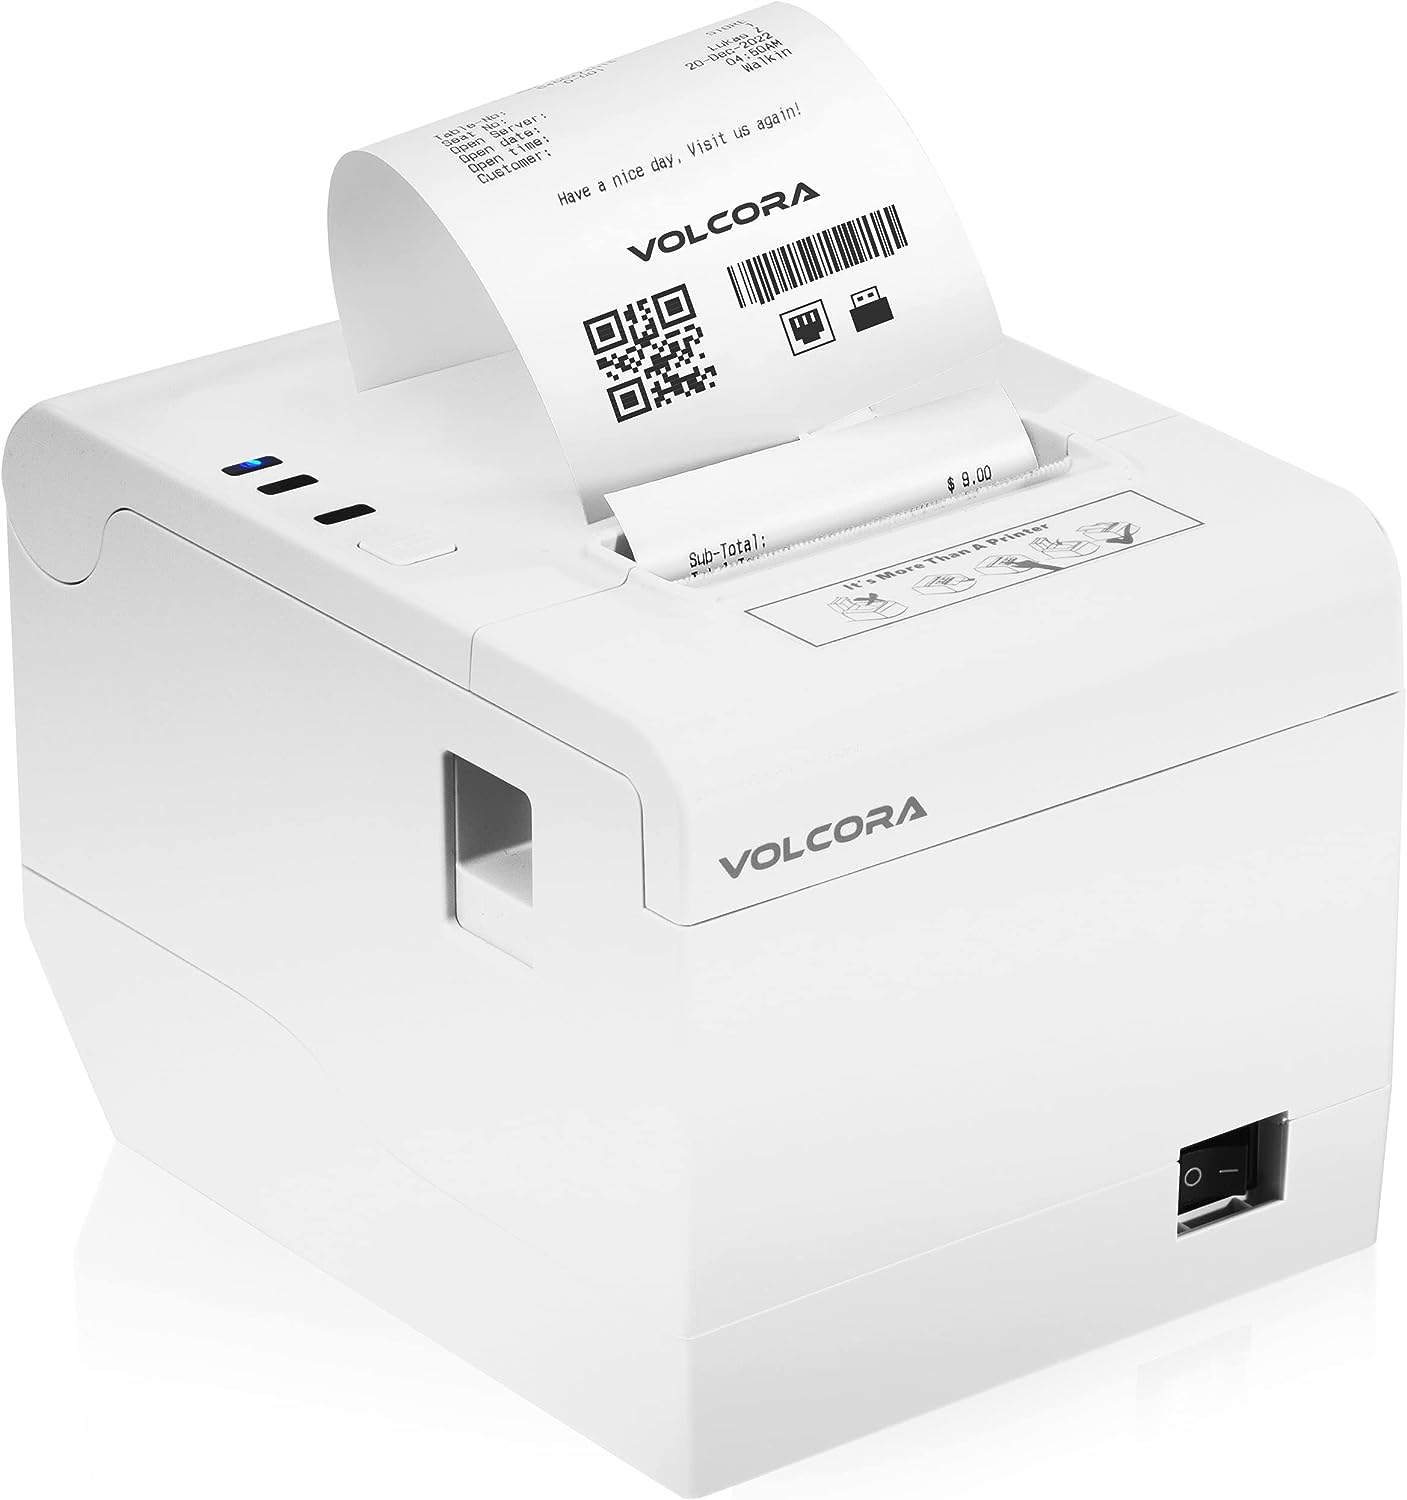 Volcora Thermal Receipt Printer, 80mm USB/Ethernet POS [...]